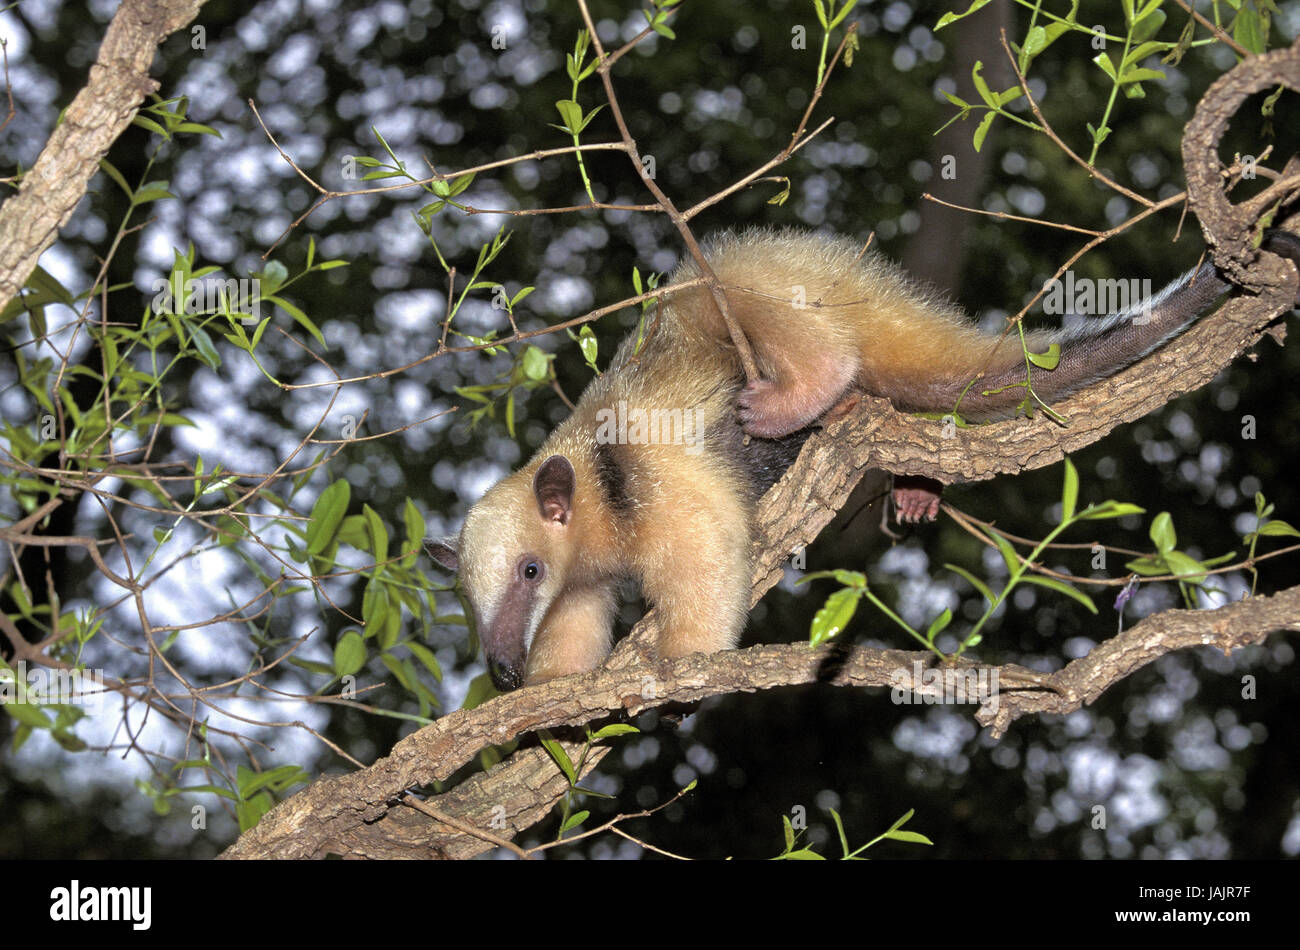 Pequeño oso hormiguero,Tamandua tetradactyla,árbol, Foto de stock